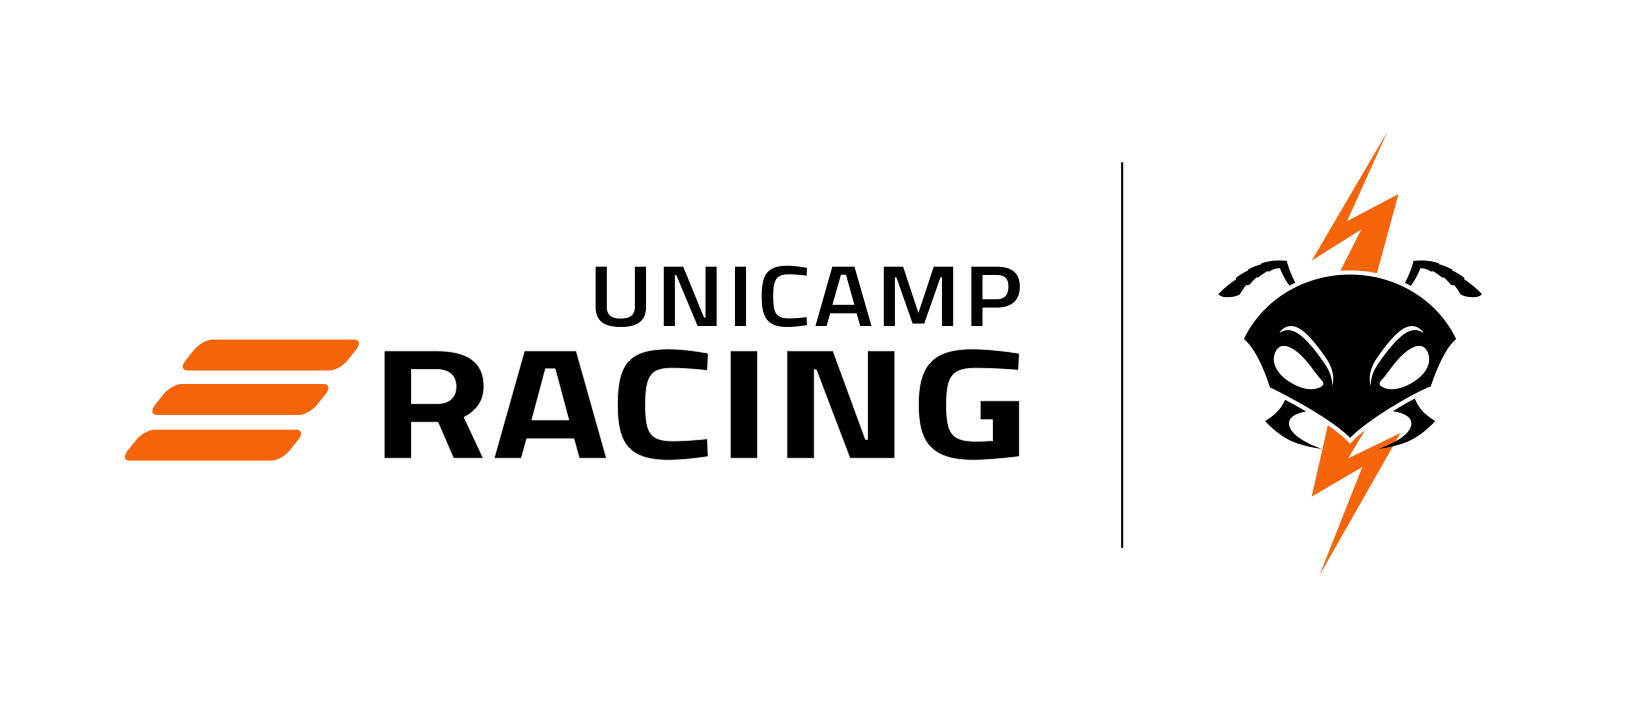 Unicamp E-racing